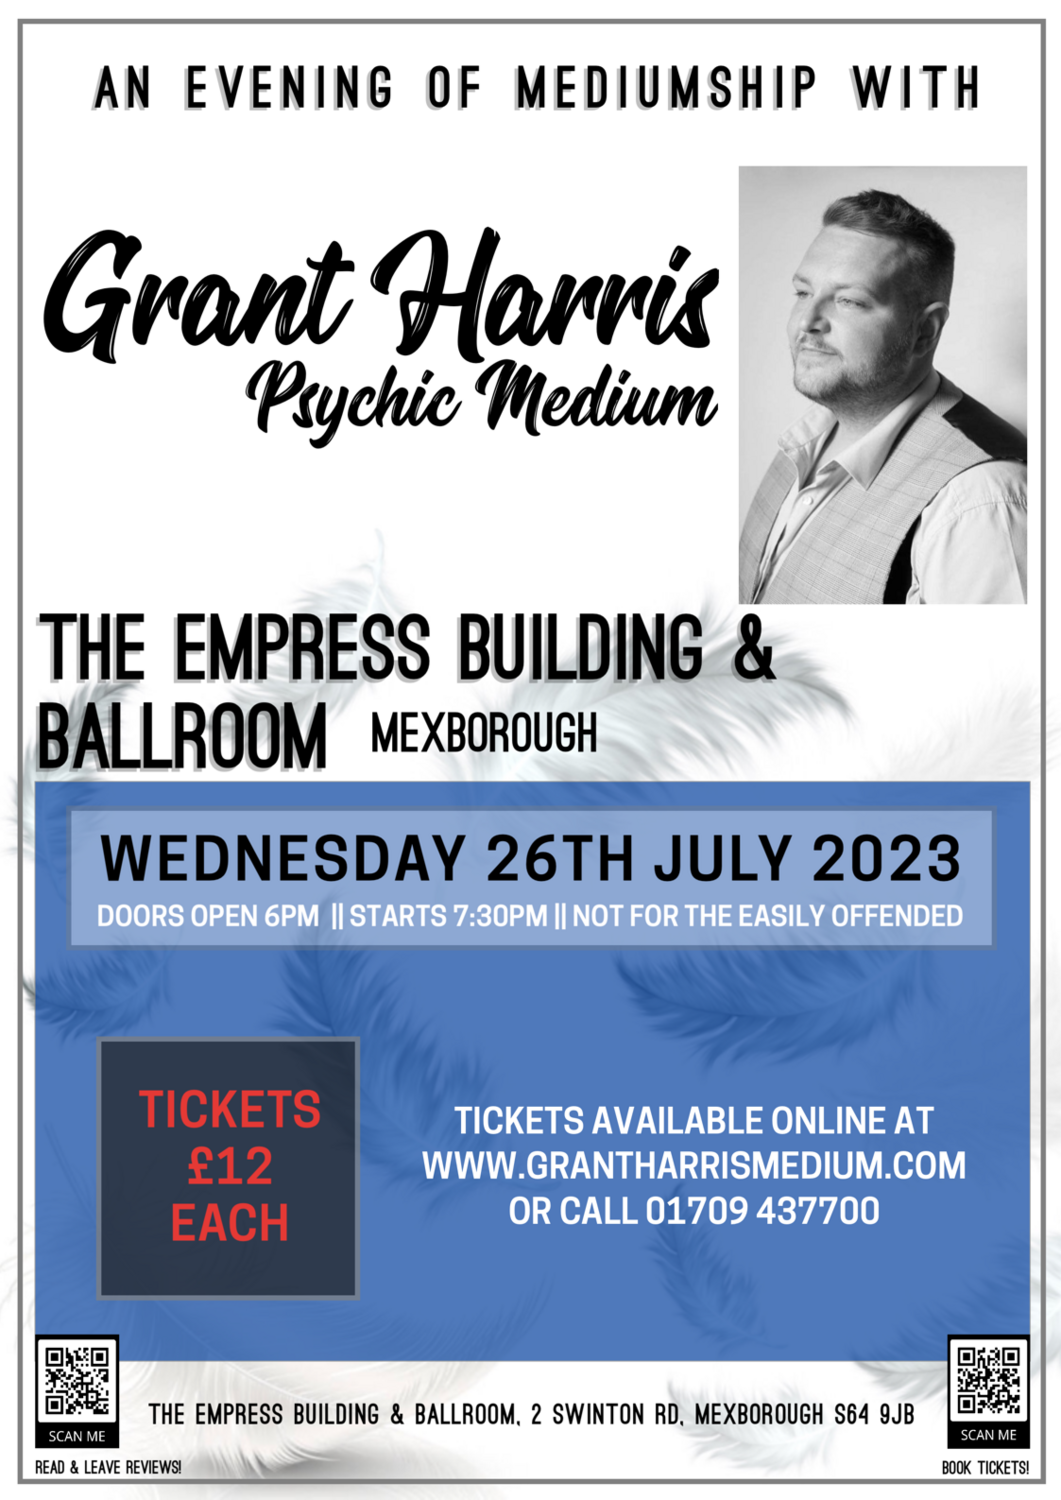 The Empress Building & Ballroom, Mexborough, Wednesday 26th July 2023